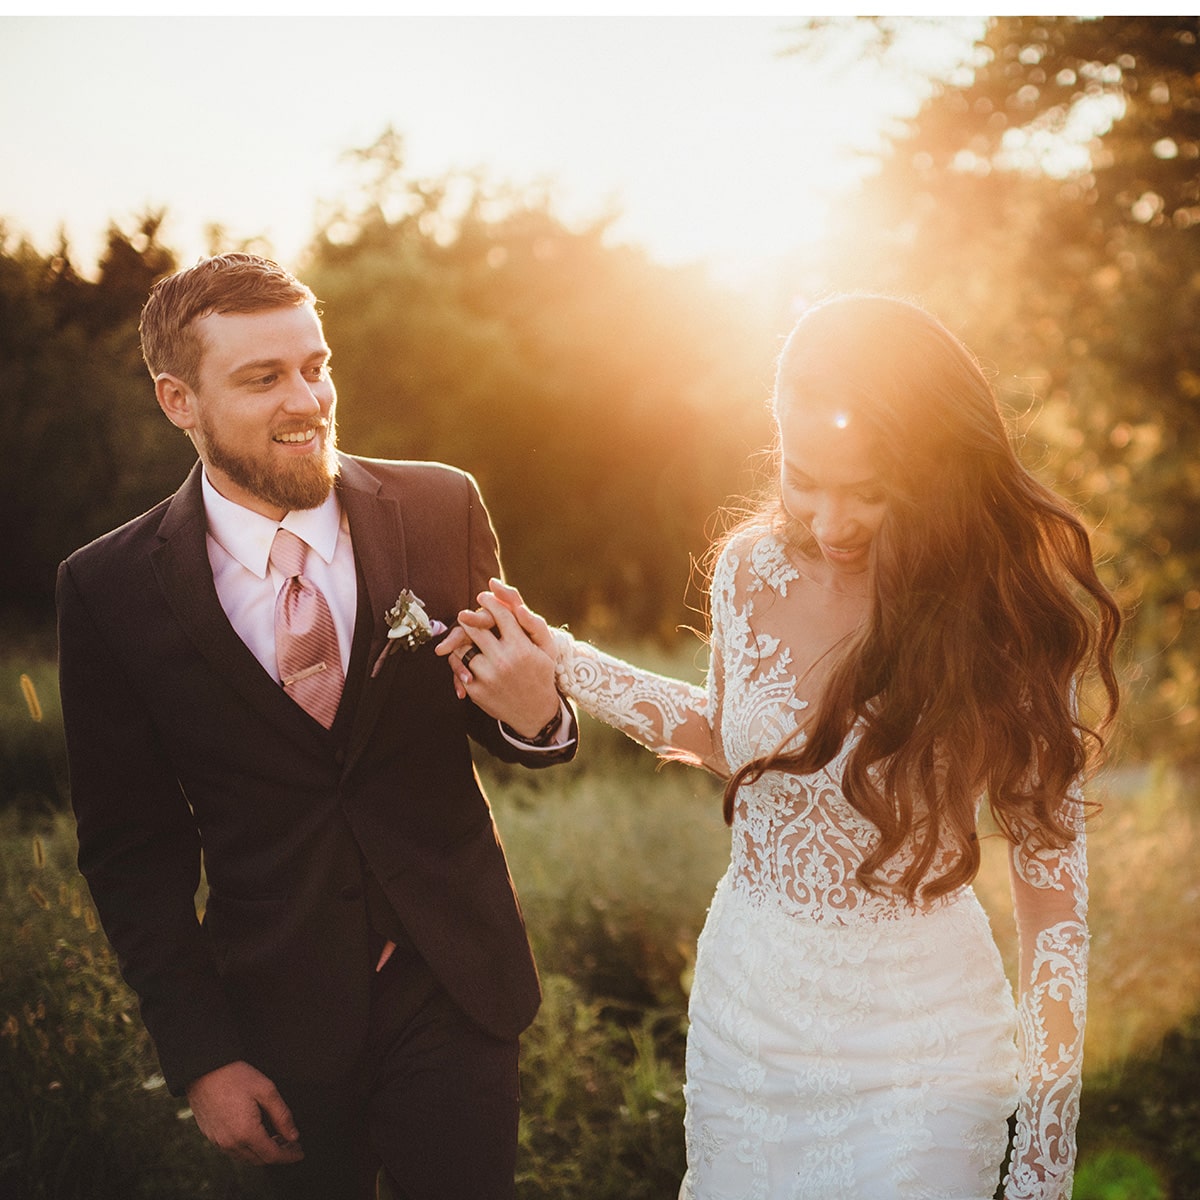 Wedding Photography Poses for Men - Heart of NC Weddings